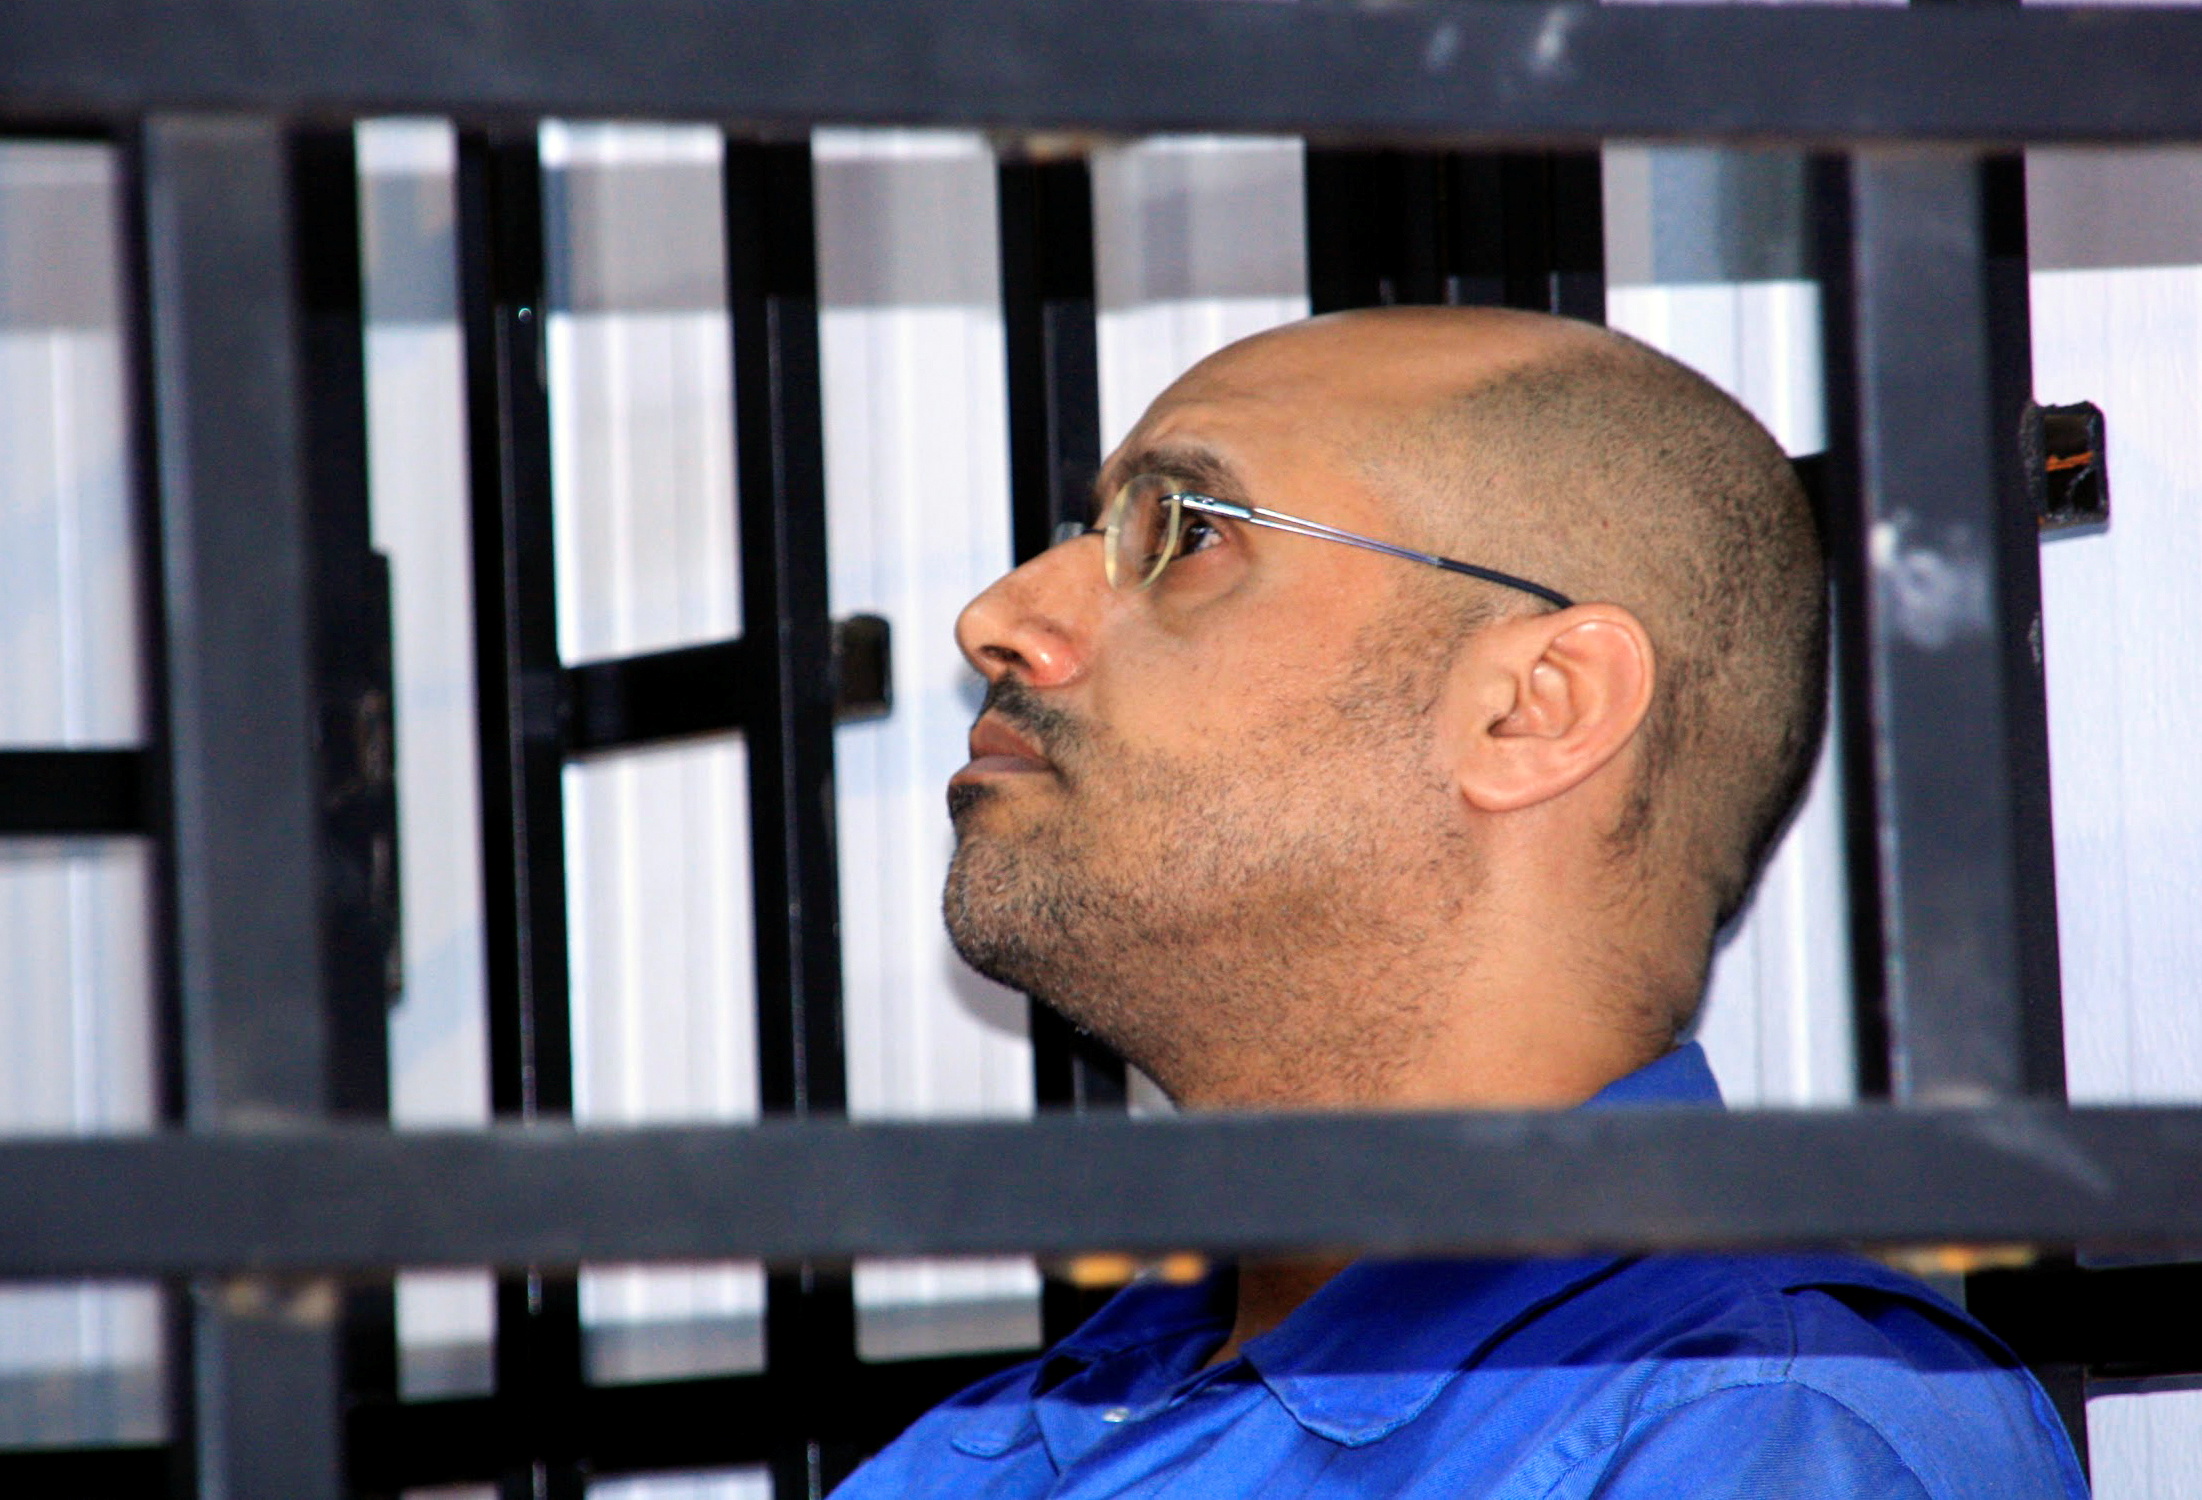 Saif al-Islam Gaddafi, son of late Libyan leader Muammar Gaddafi, attends a hearing behind bars in a courtroom in Zintan